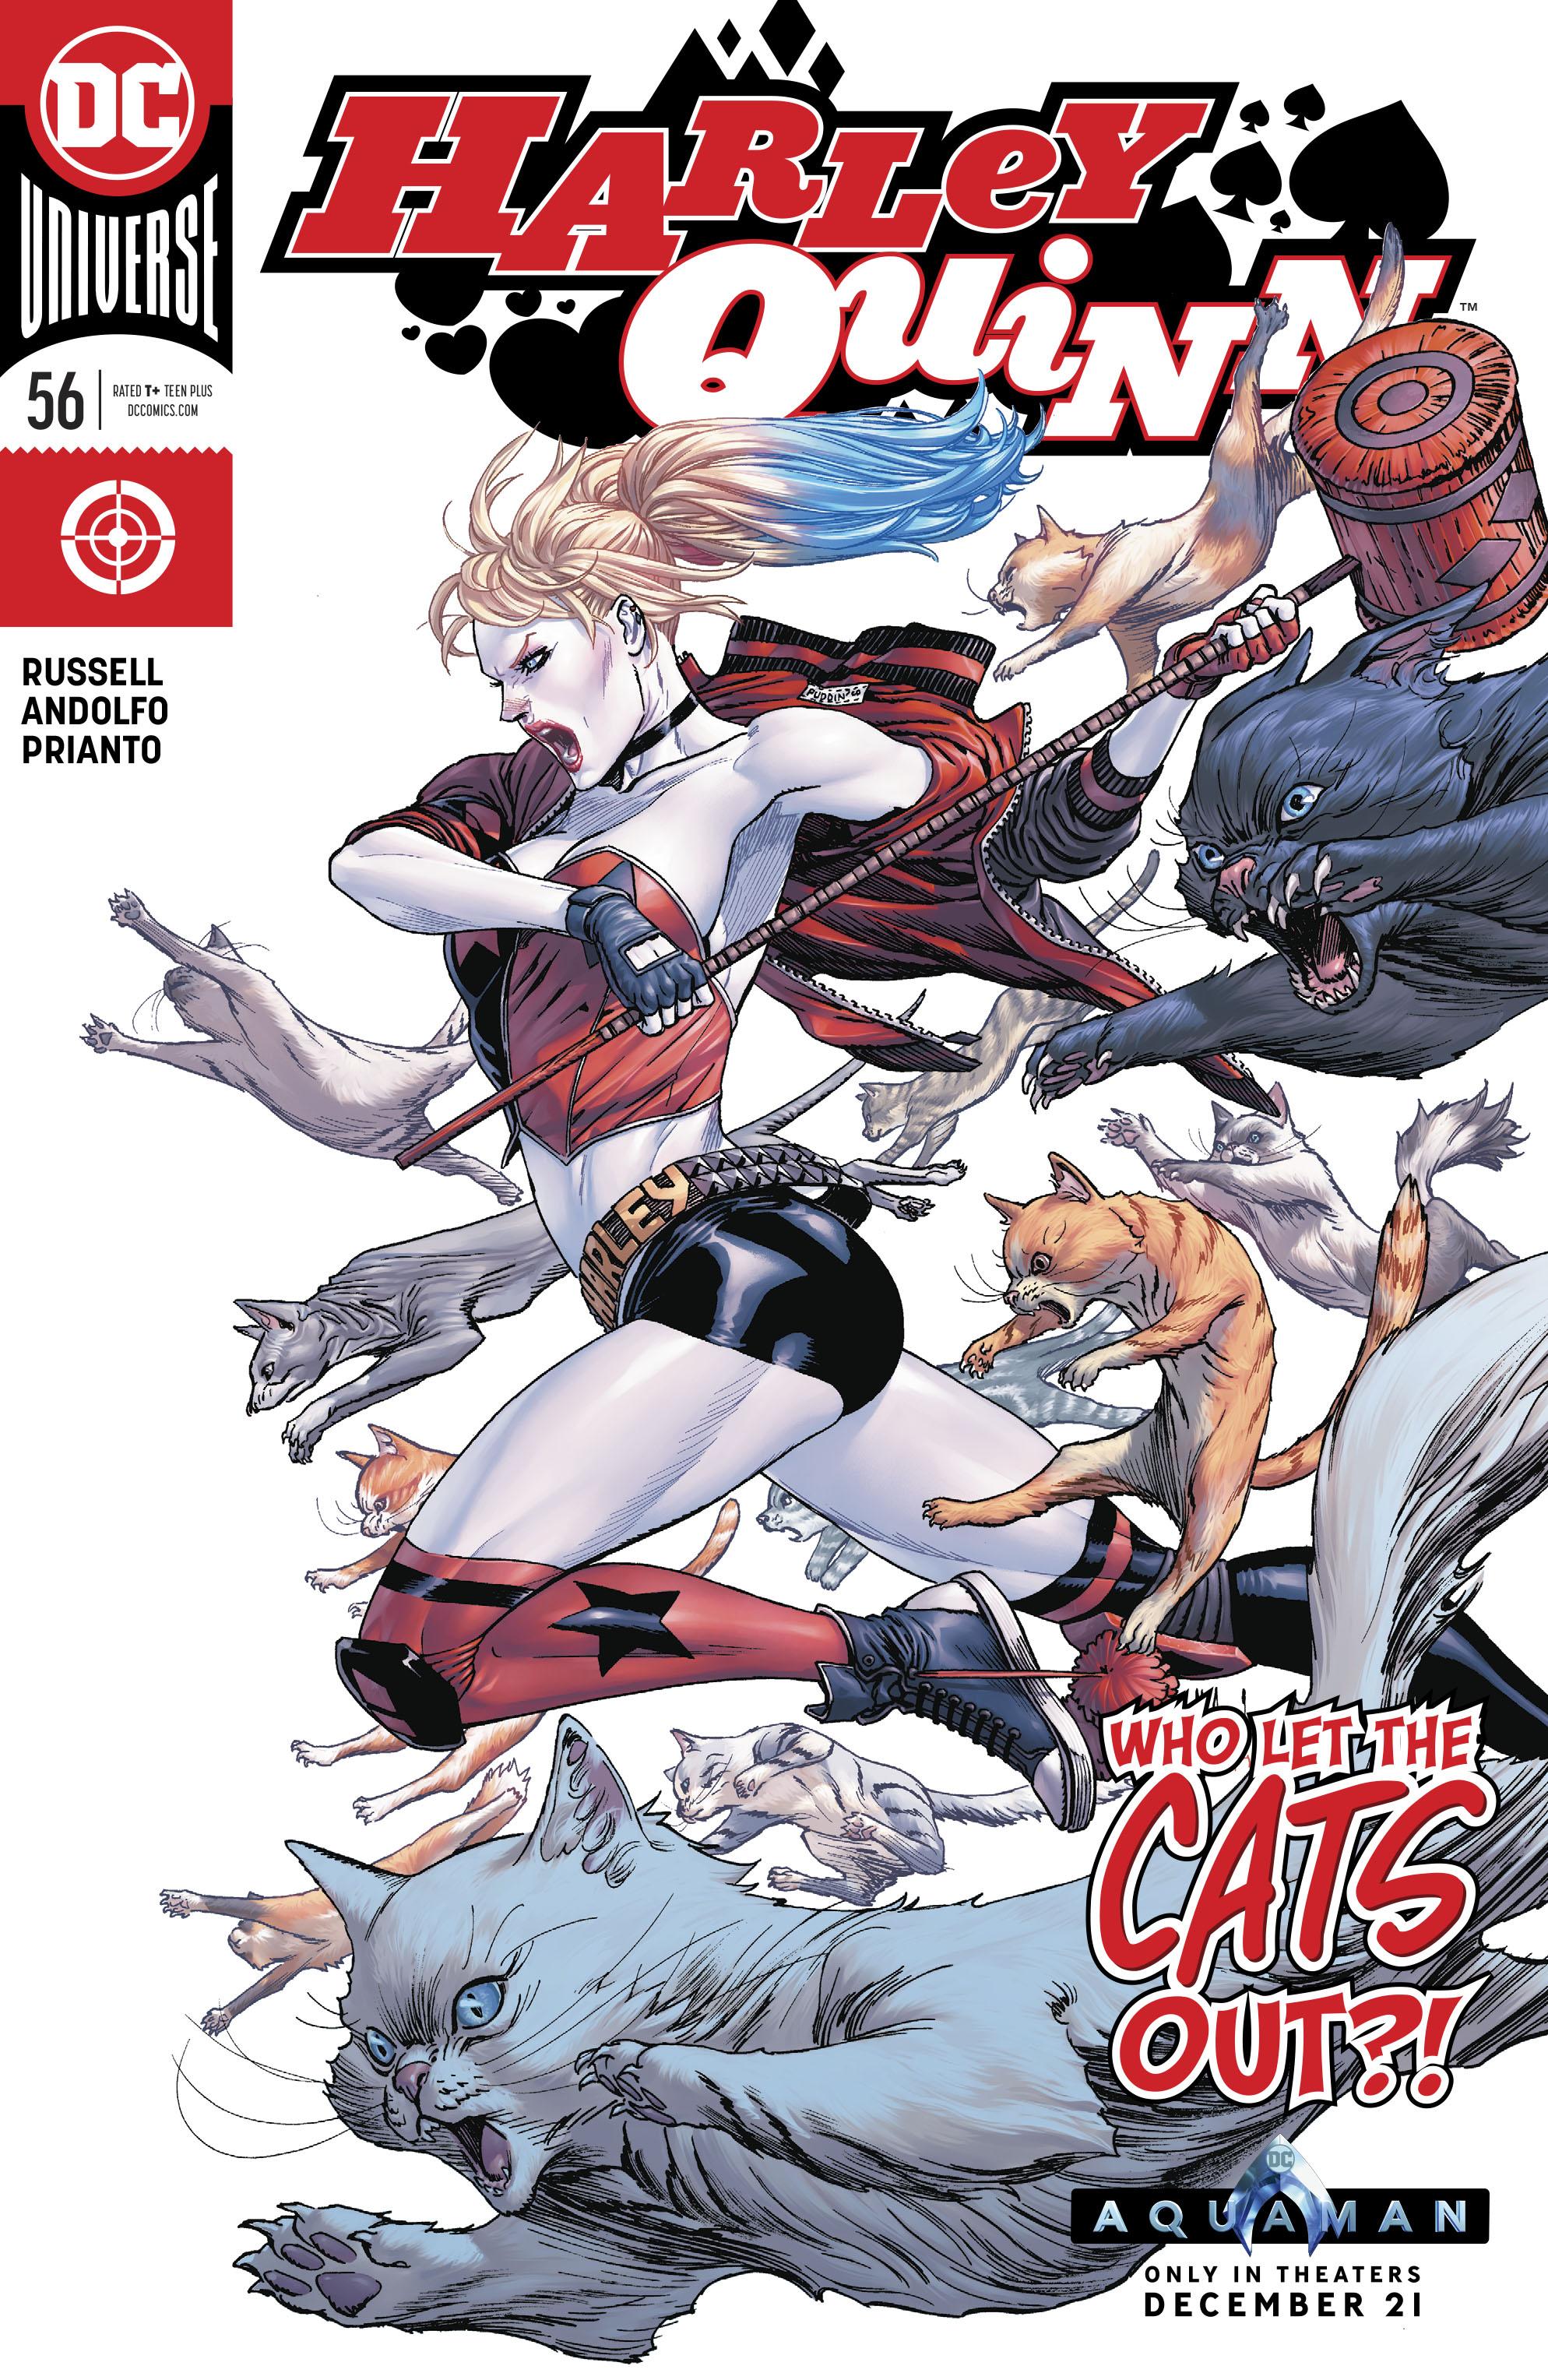 Harley Quinn Vol. 3 #56